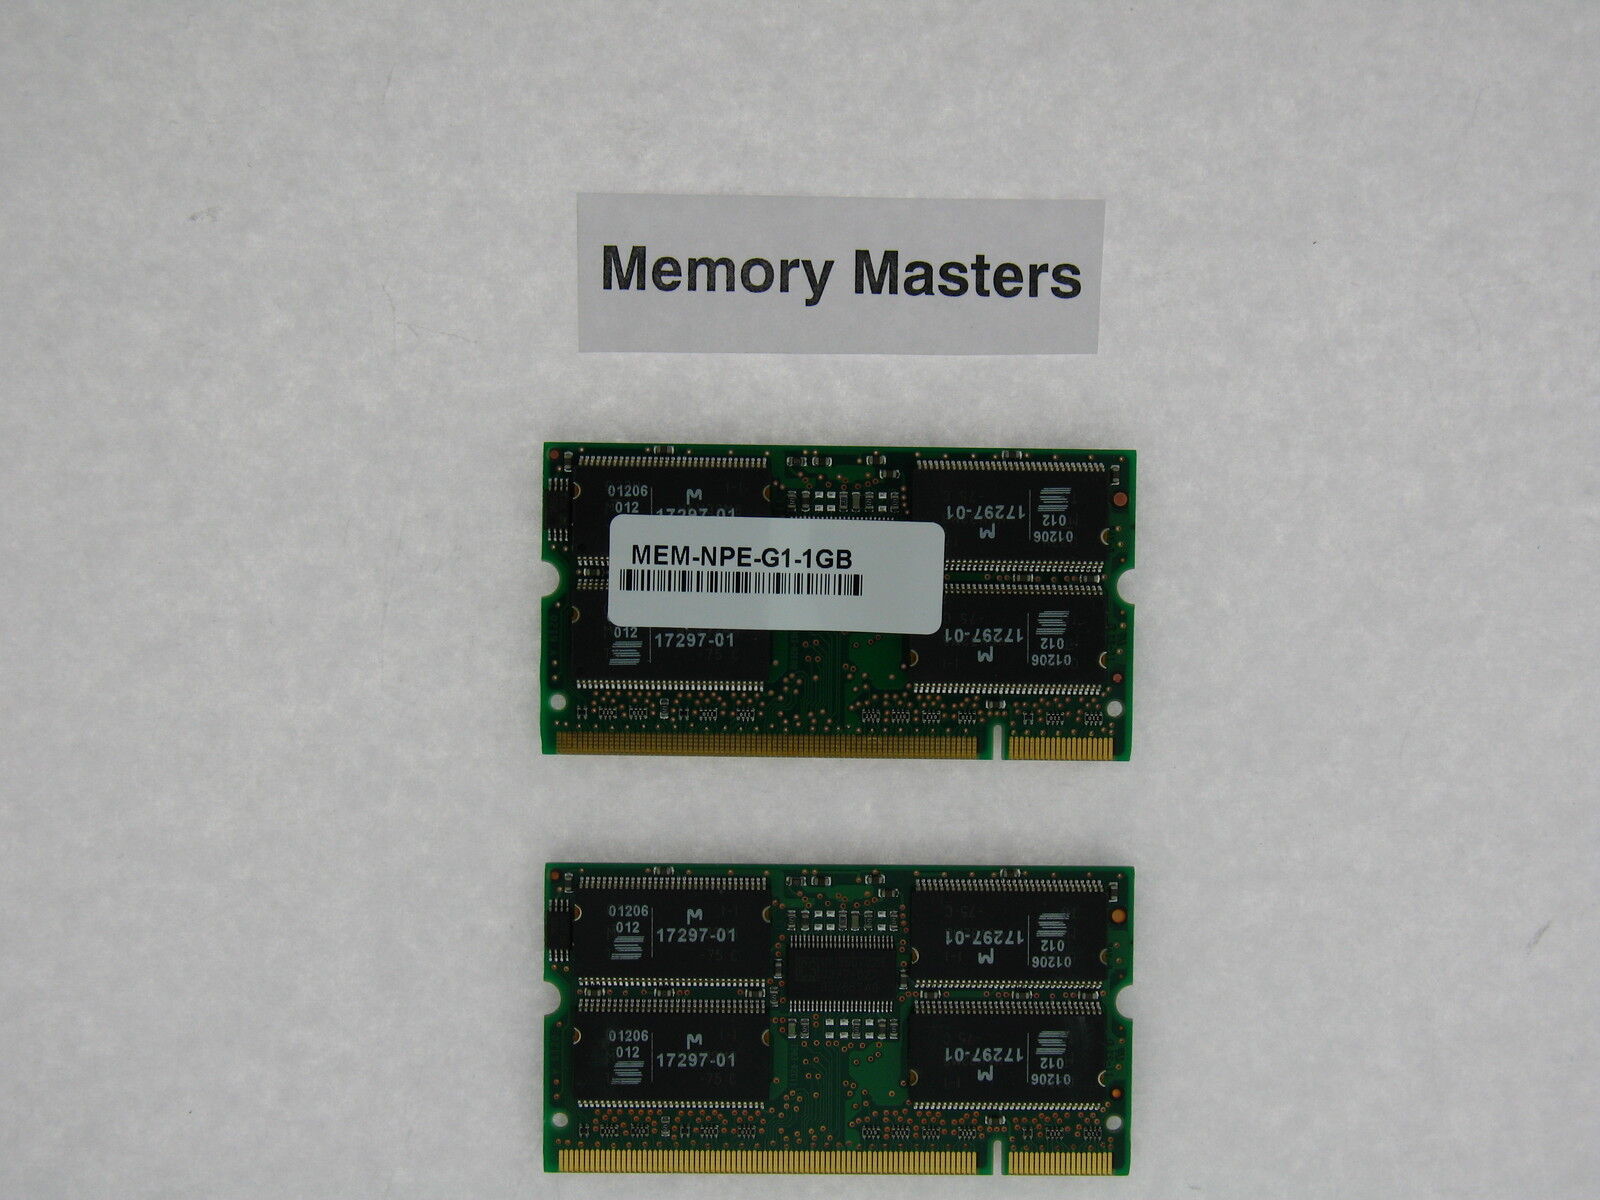 MEM-NPE-G1-1GB 2x512MB Approved Memory for Cisco 7200 NPE-G1